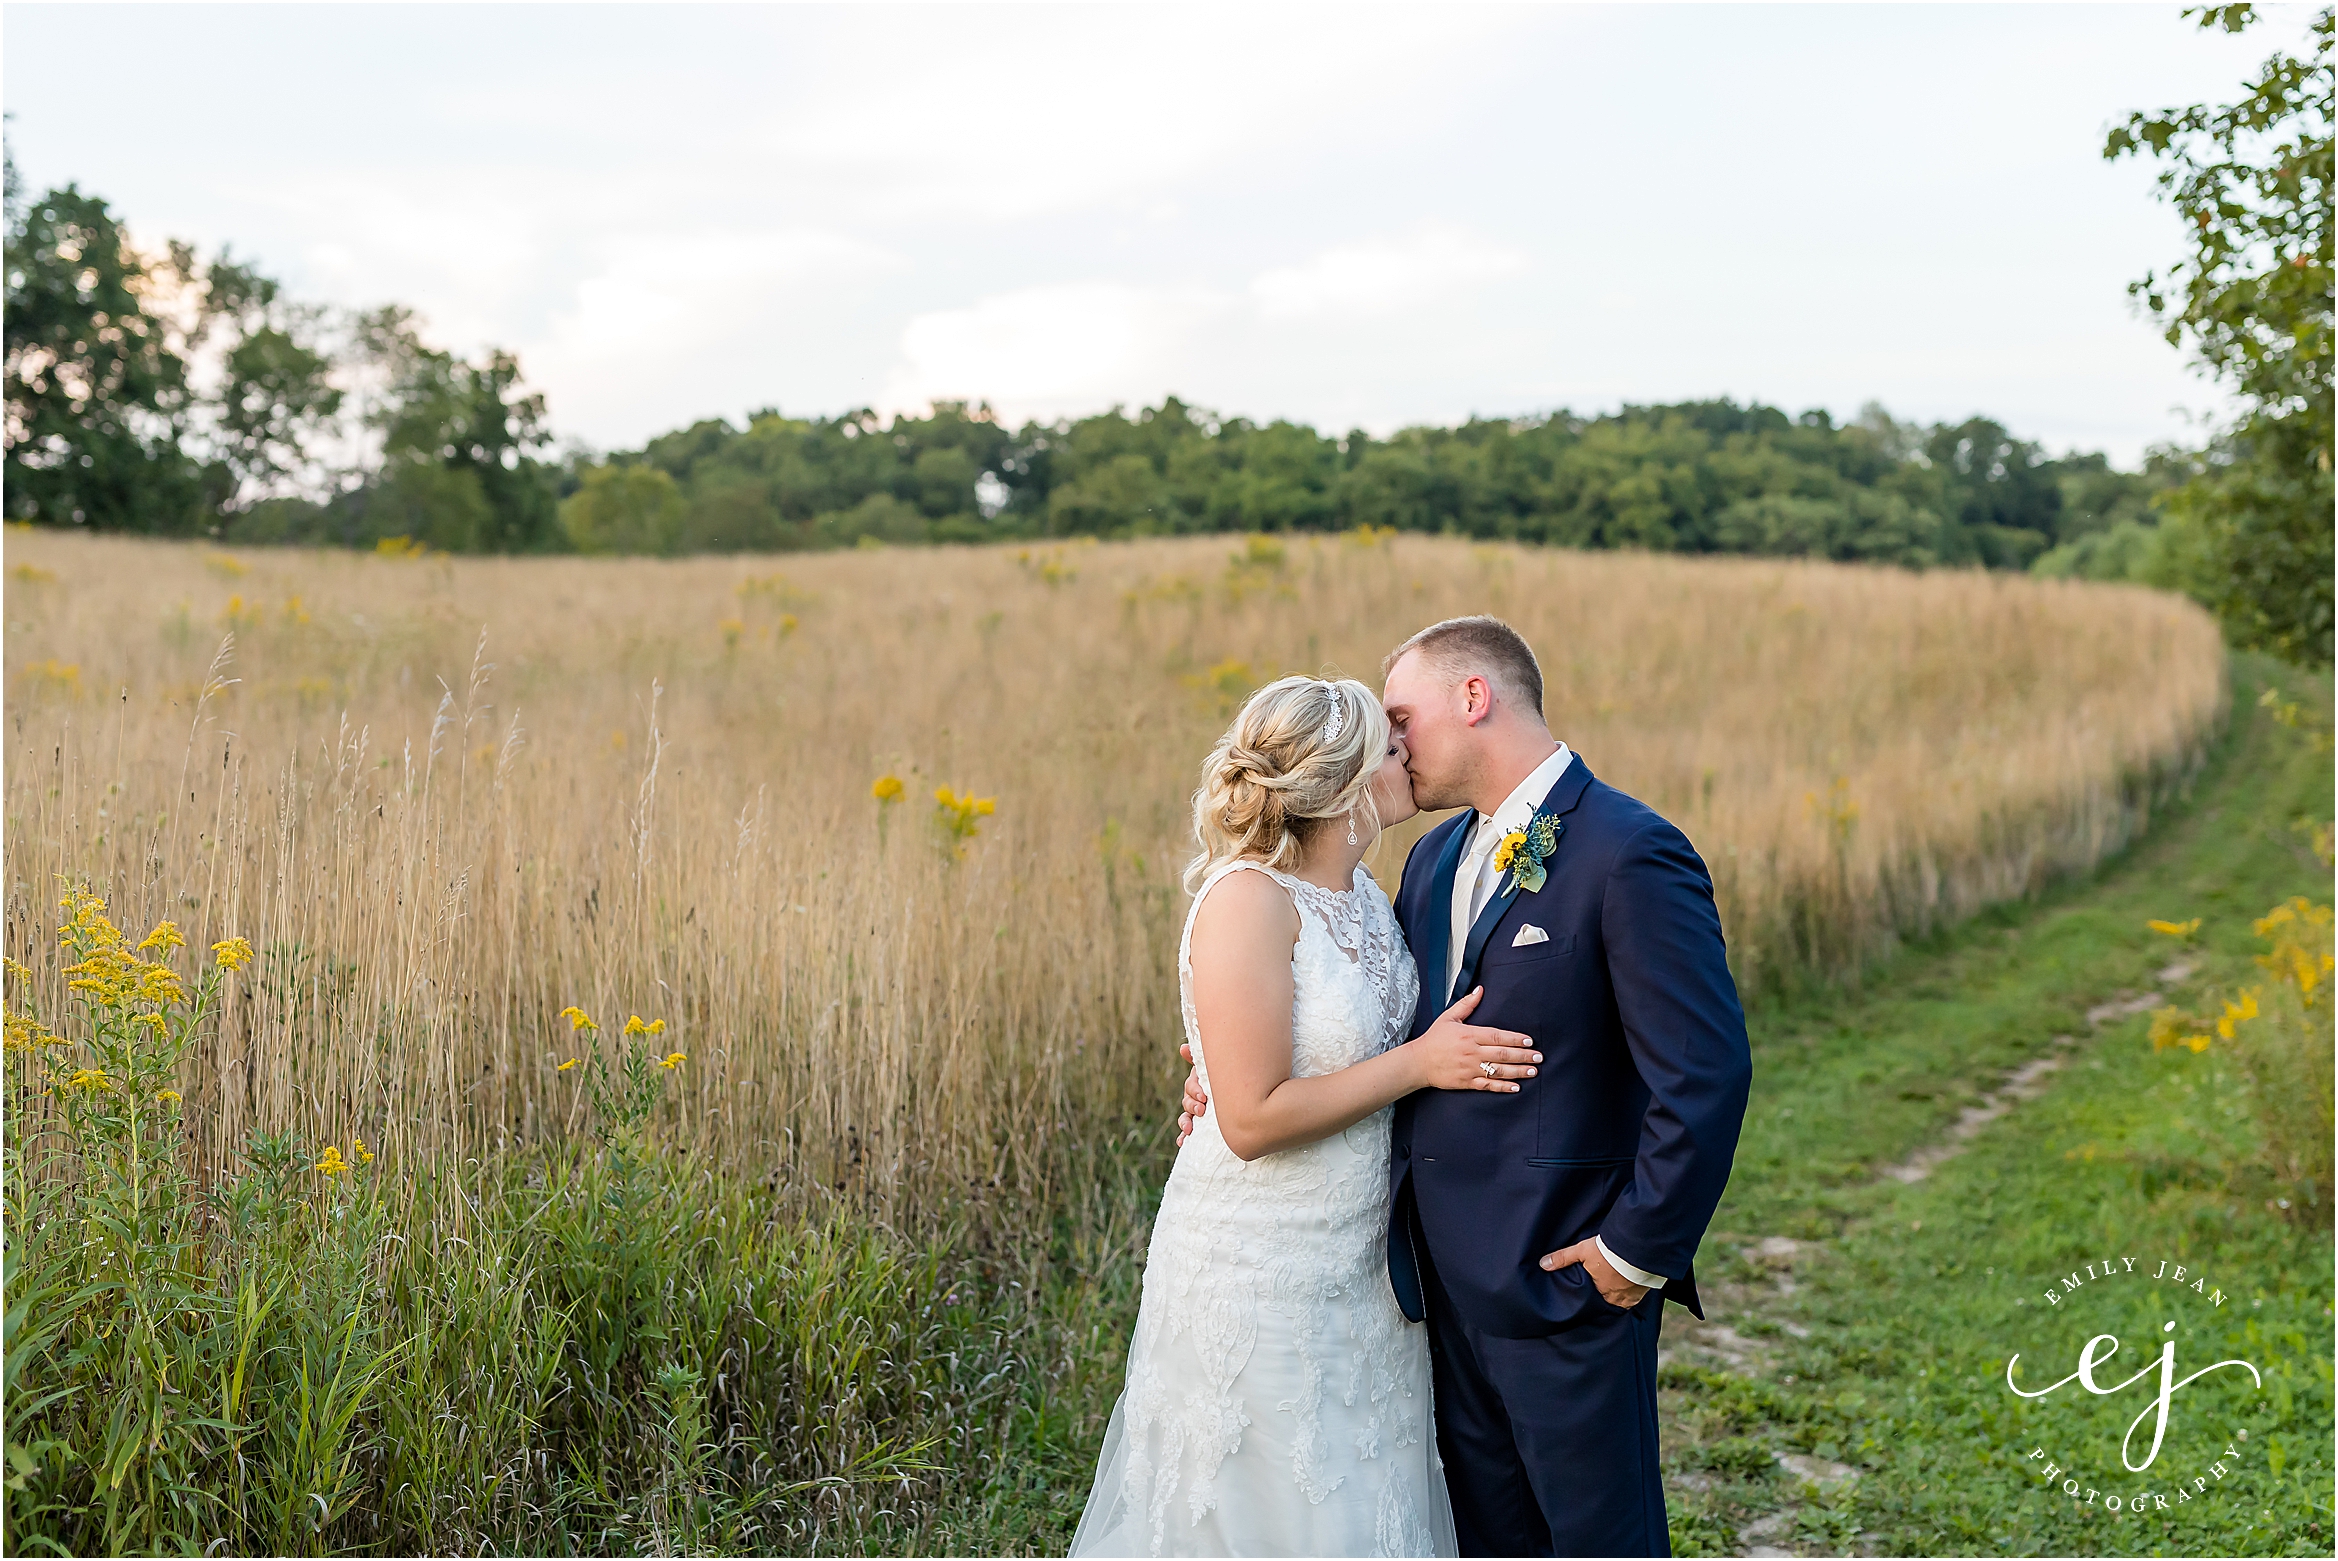 sunset photos bride and groom outdoor field in wisconsin summer